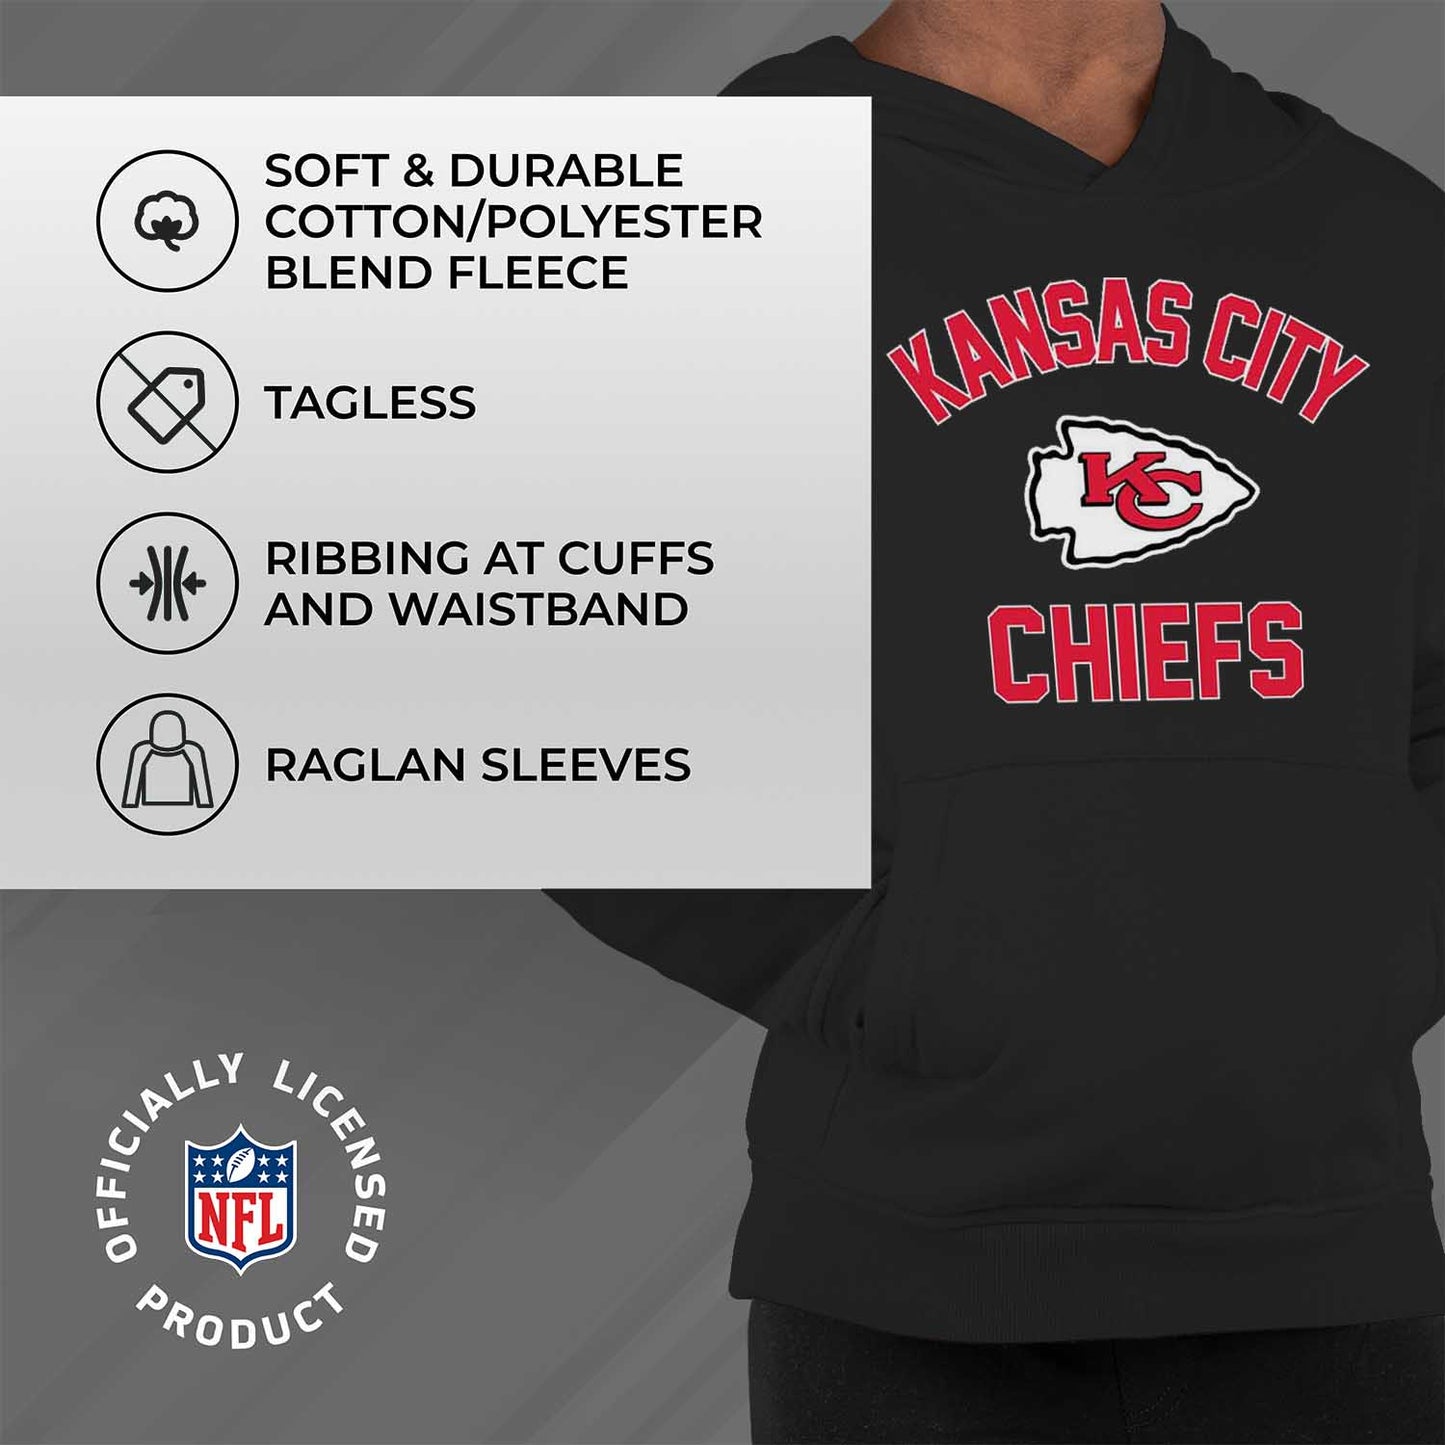 Kansas City Chiefs NFL Youth Gameday Hooded Sweatshirt - Black